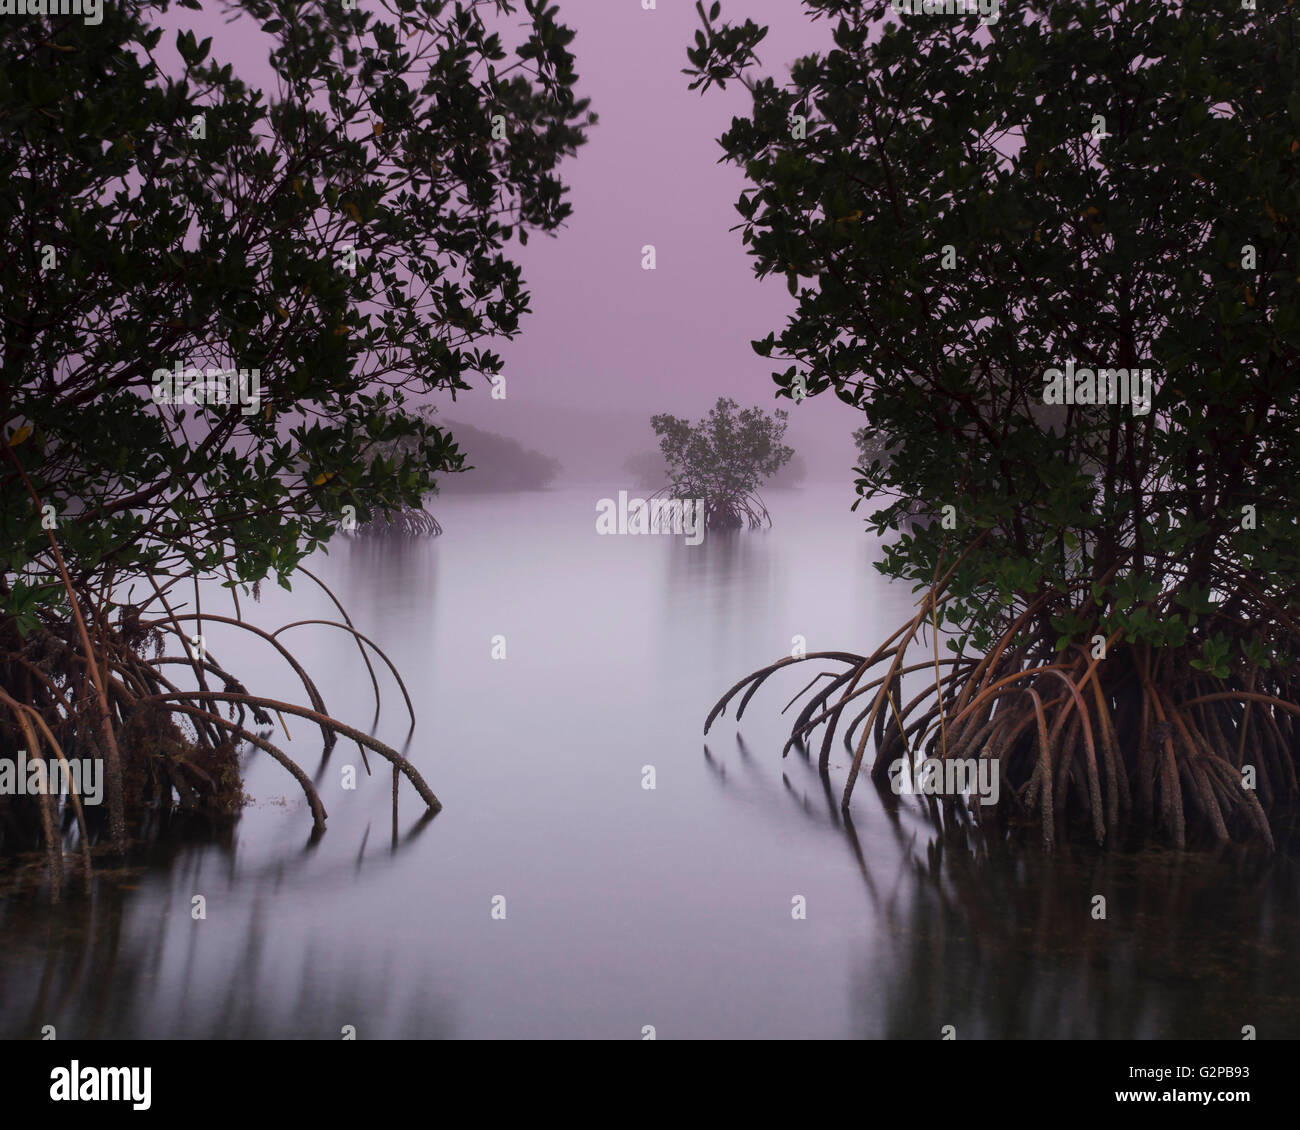 A calm and peaceful foggy morning on a Florida mangrove shoreline. Stock Photo